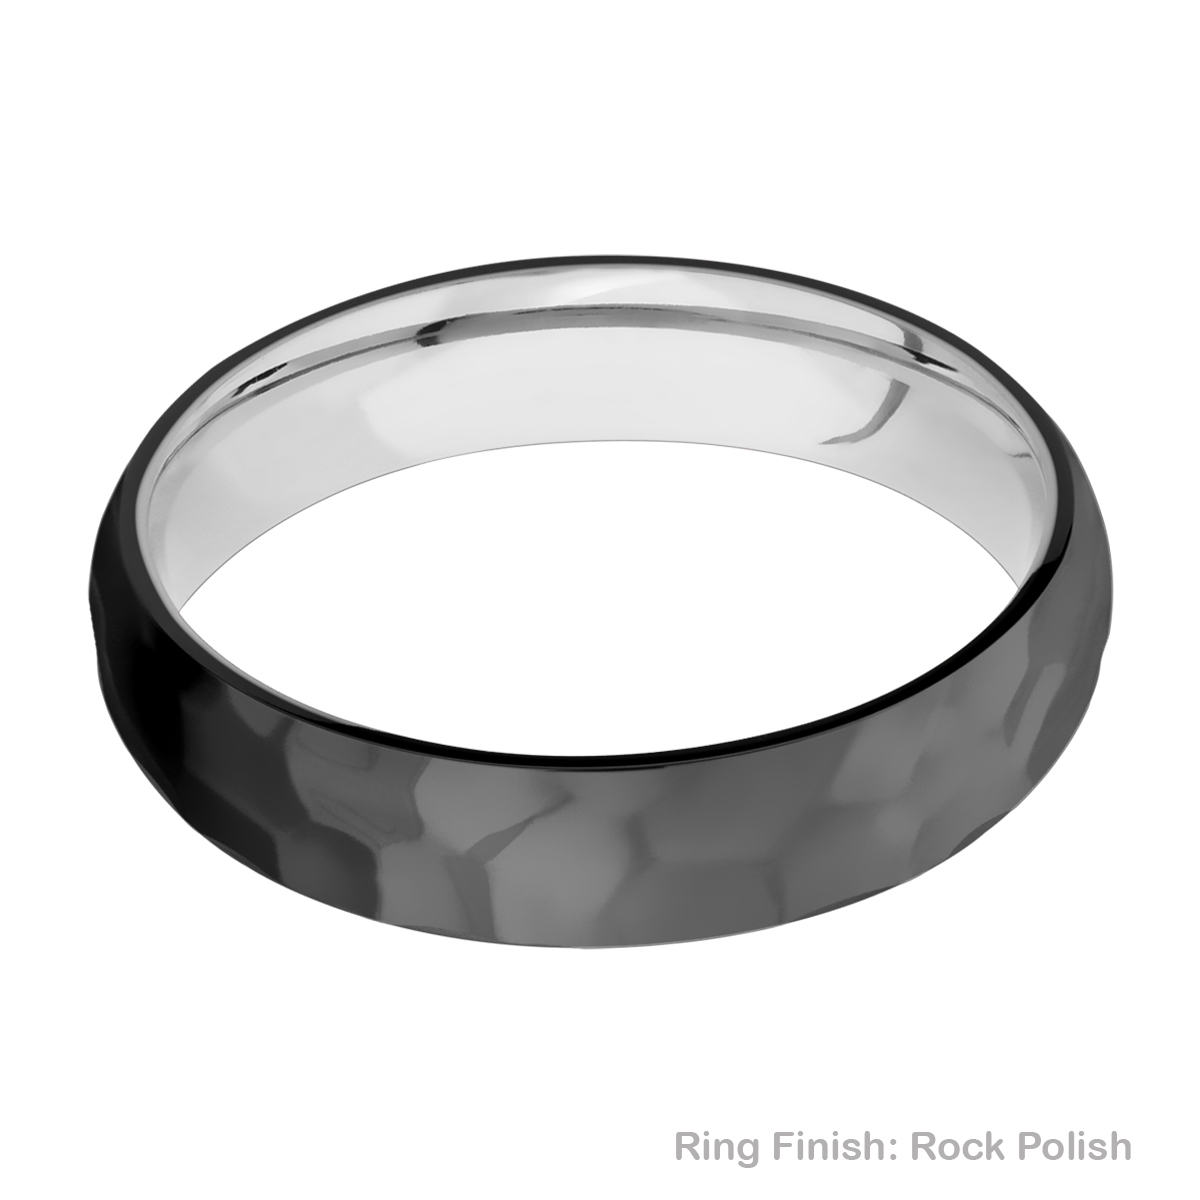 Lashbrook CCSLEEVEZ5D Zirconium and Cobalt Chrome Wedding Ring or Band Alternative View 14